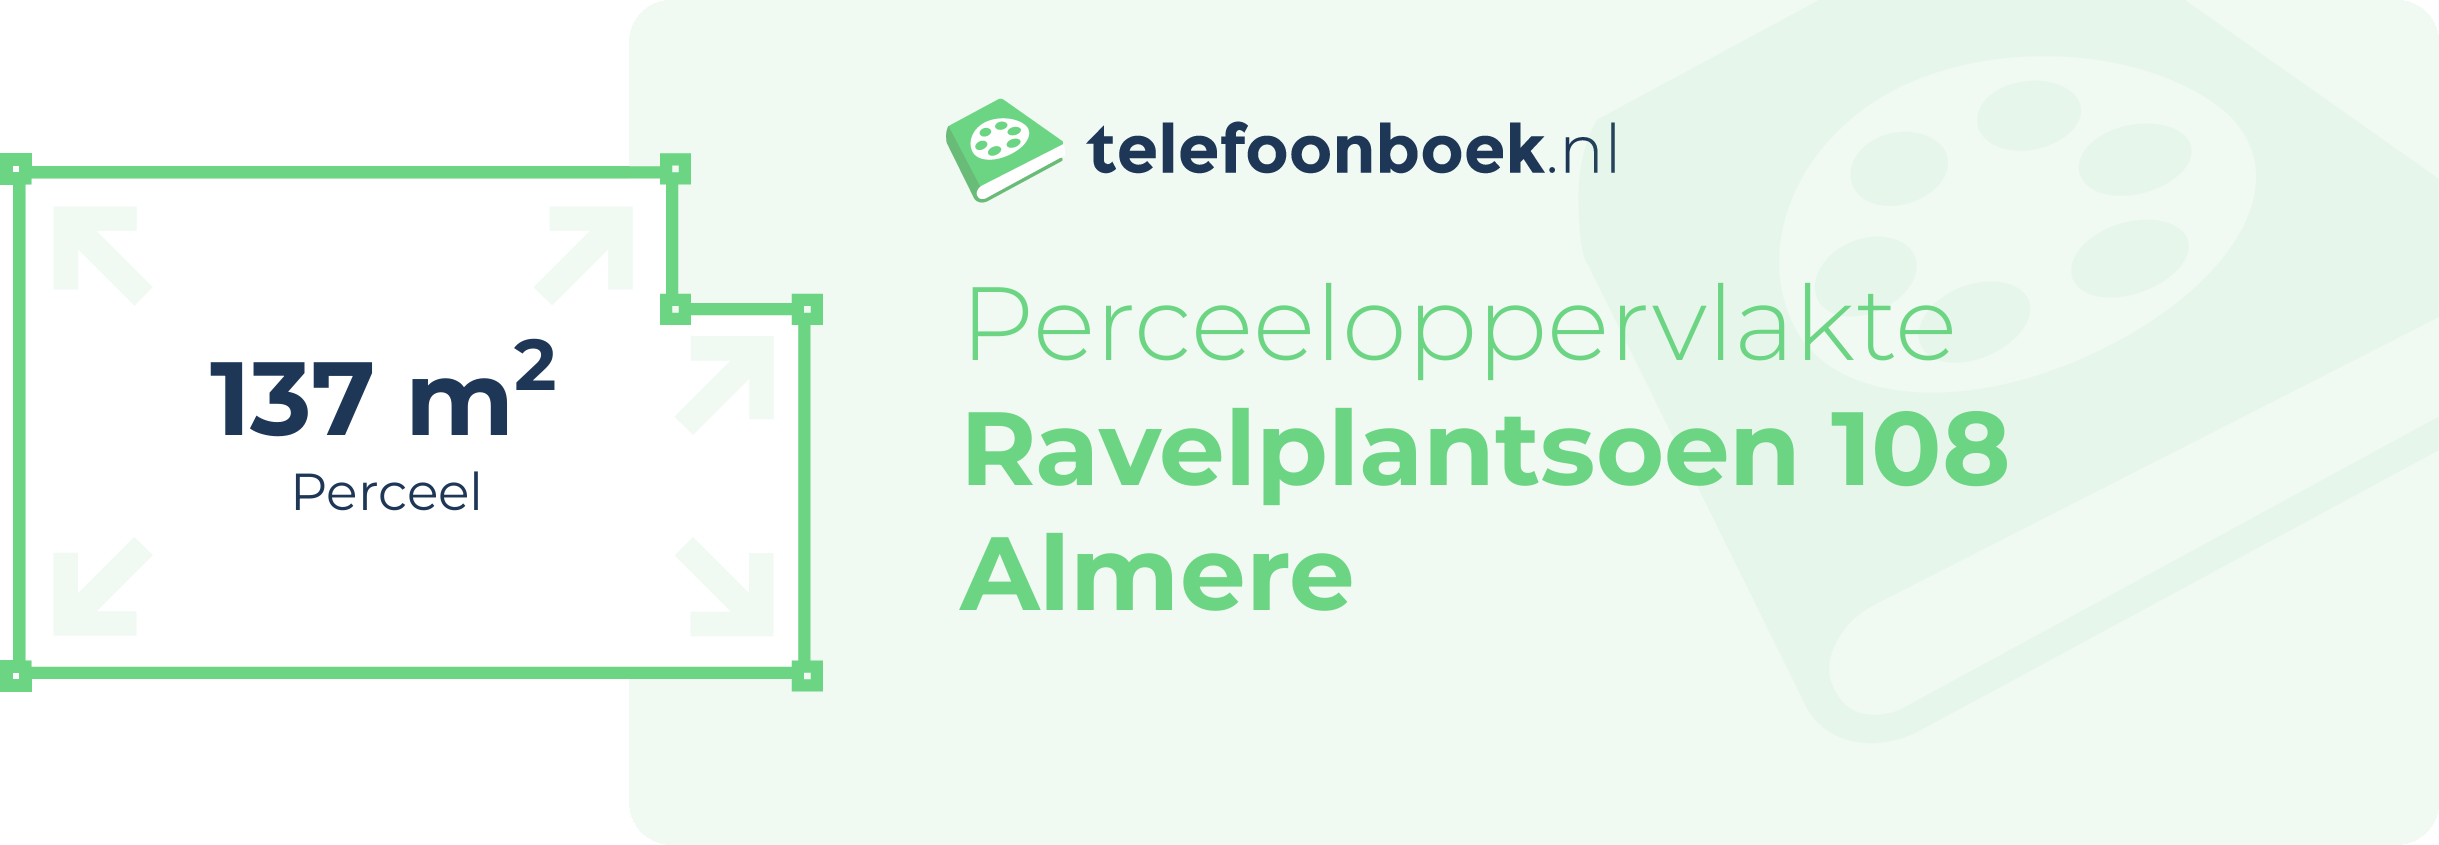 Perceeloppervlakte Ravelplantsoen 108 Almere